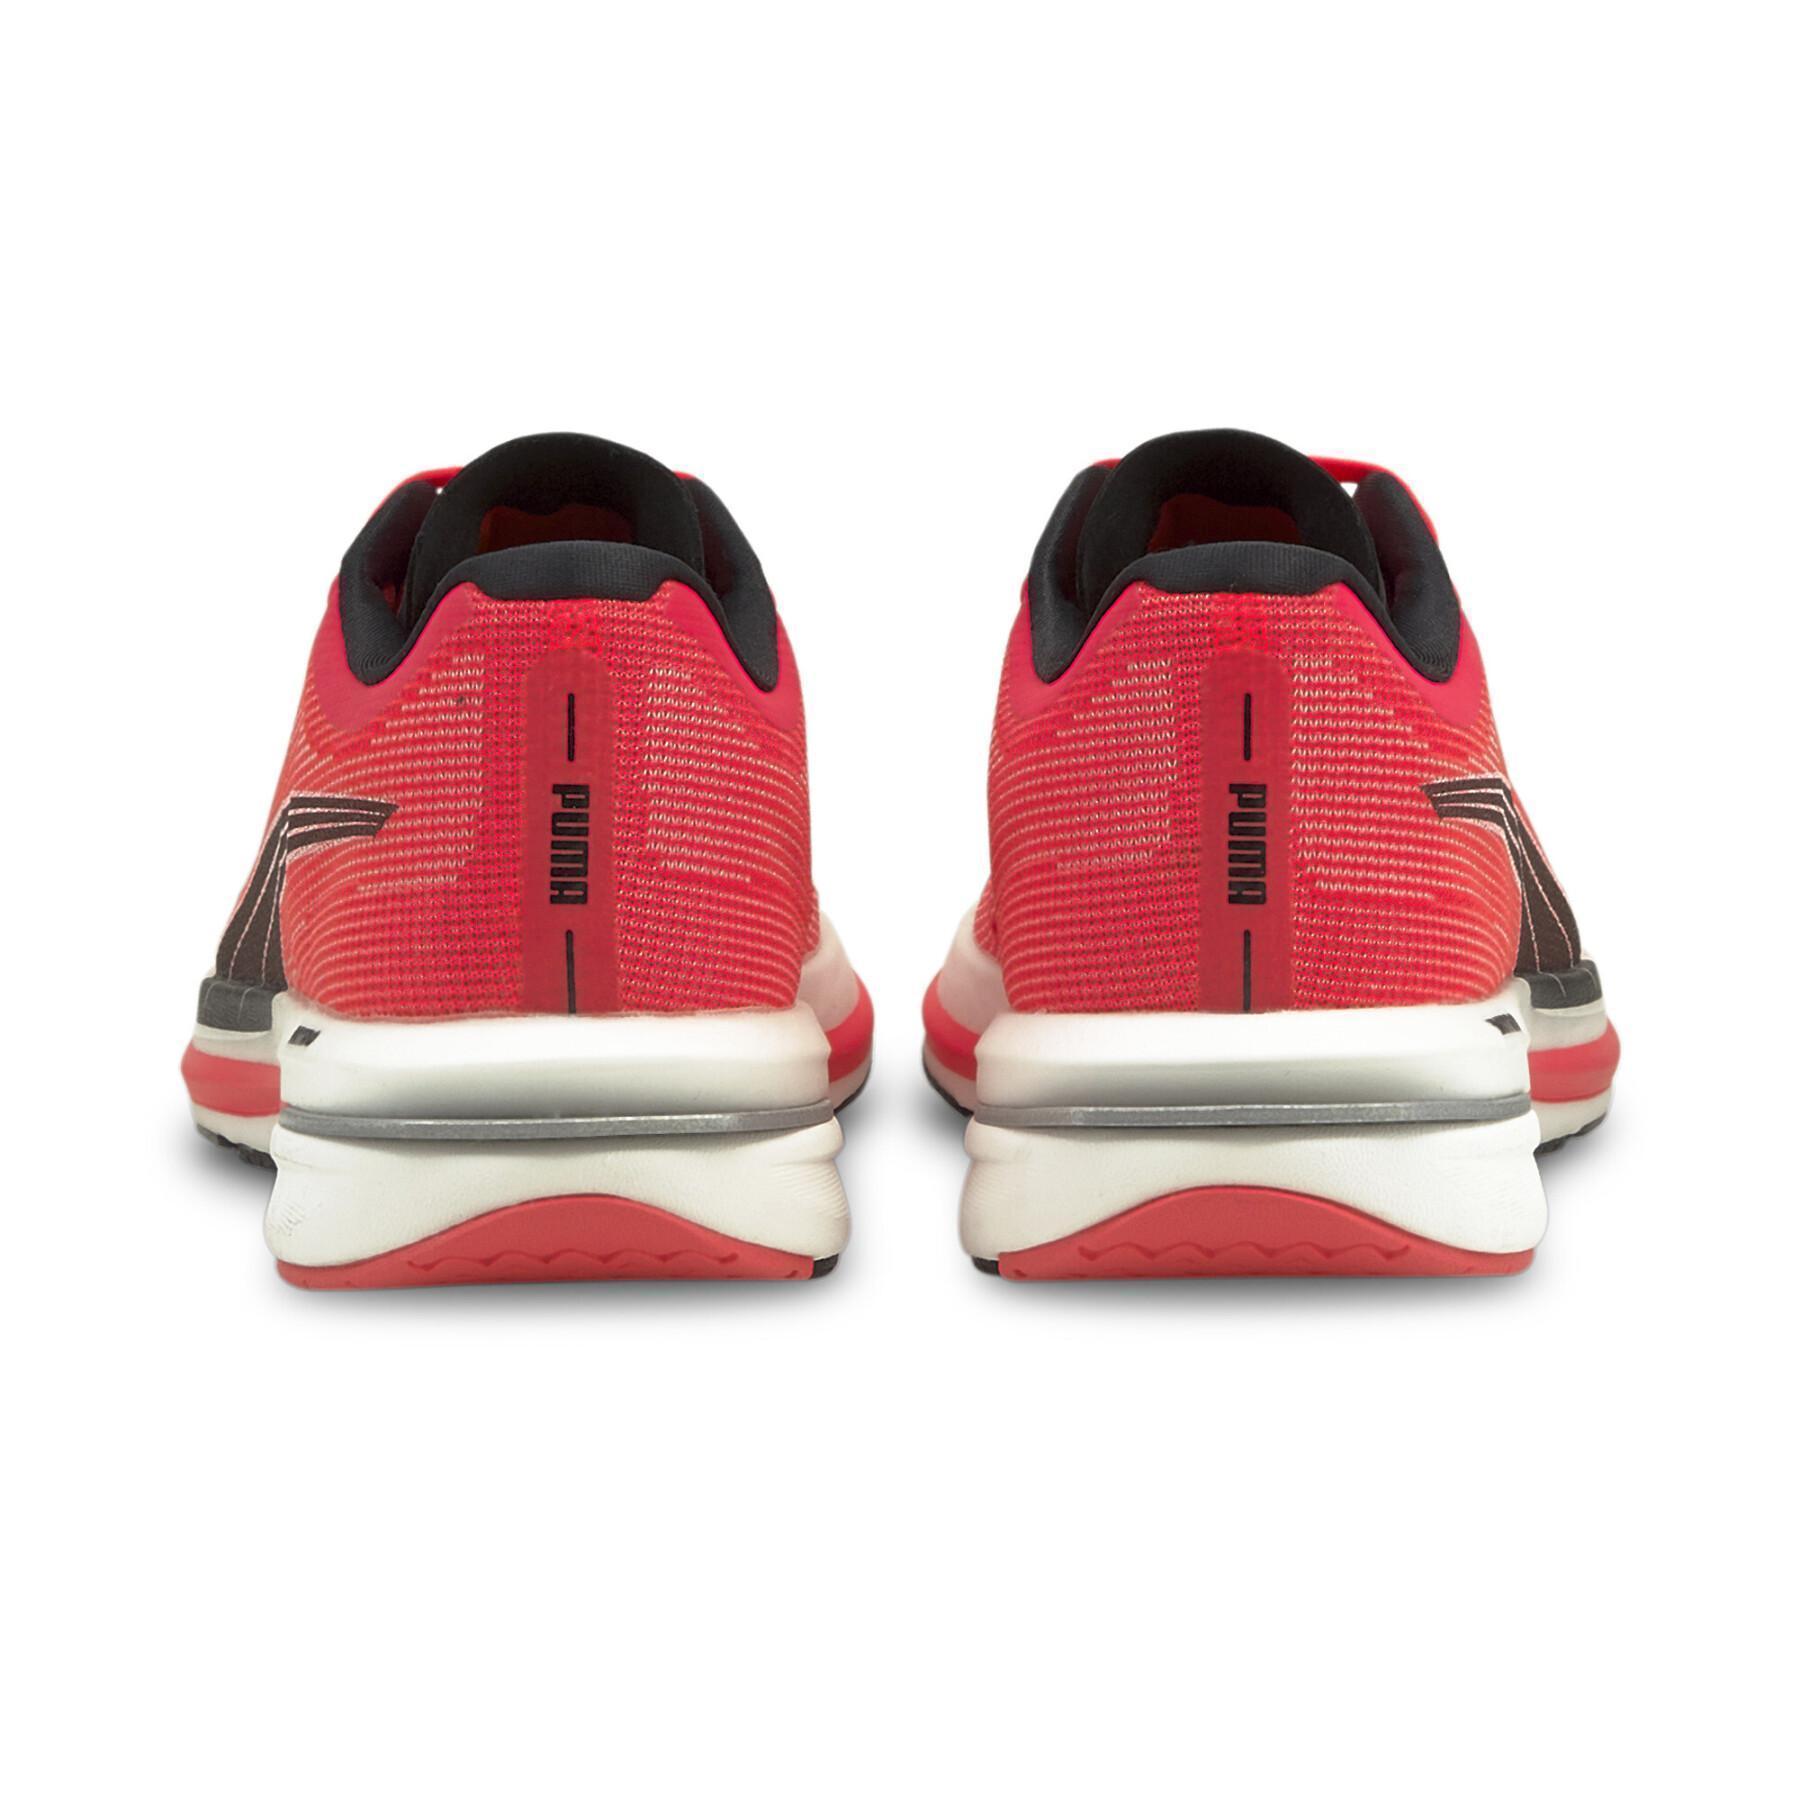 Chaussures de running femme Puma Velocity Nitro